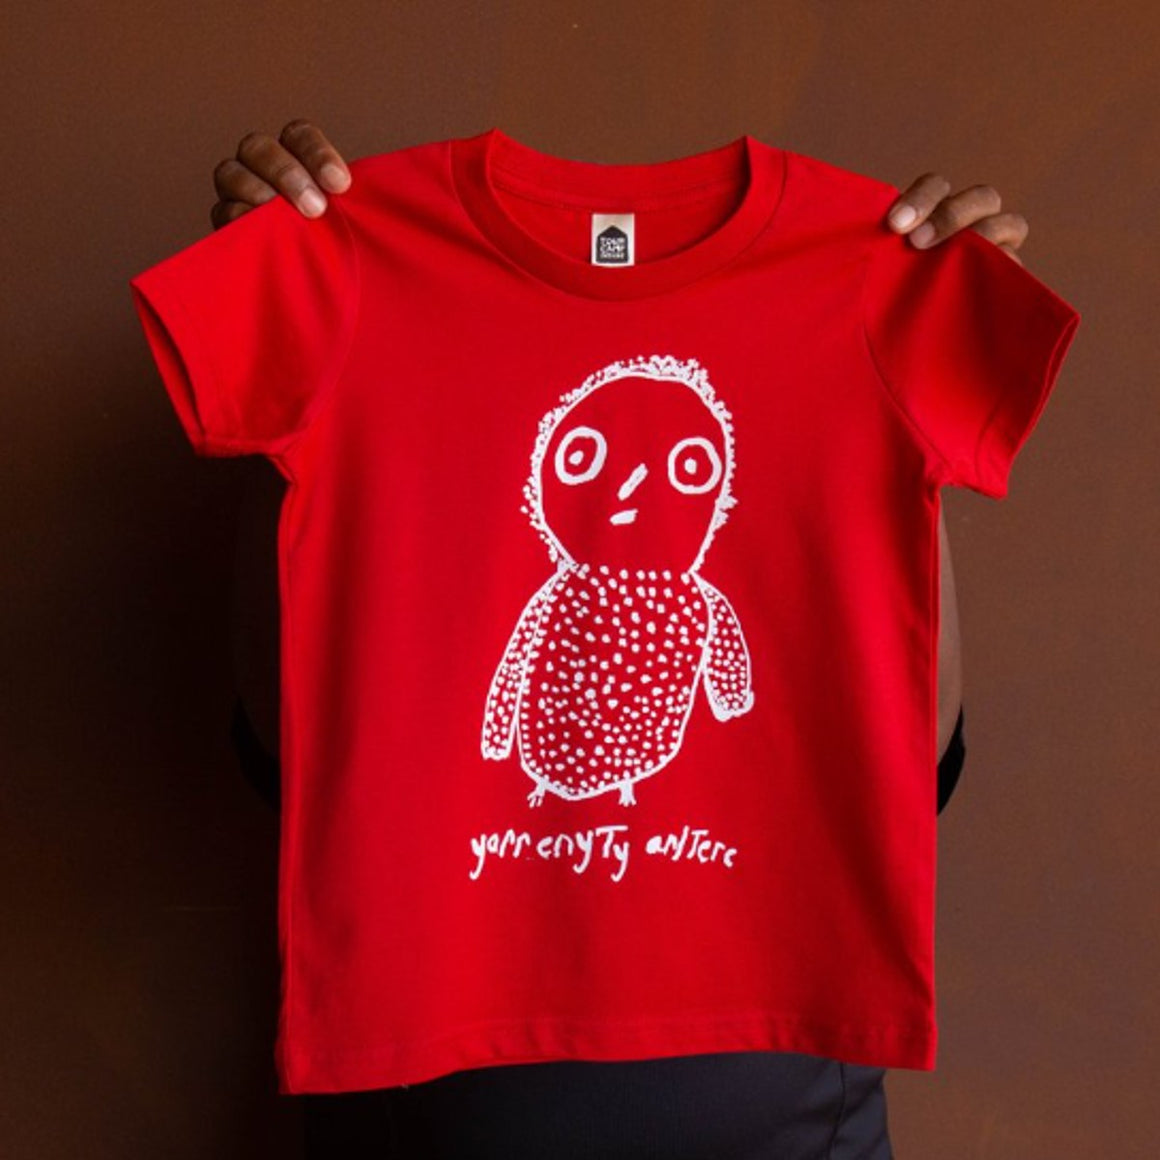 Kids t-shirt | Little Owl by Trudy Inkamala | Yarrenyty Arltere Artists